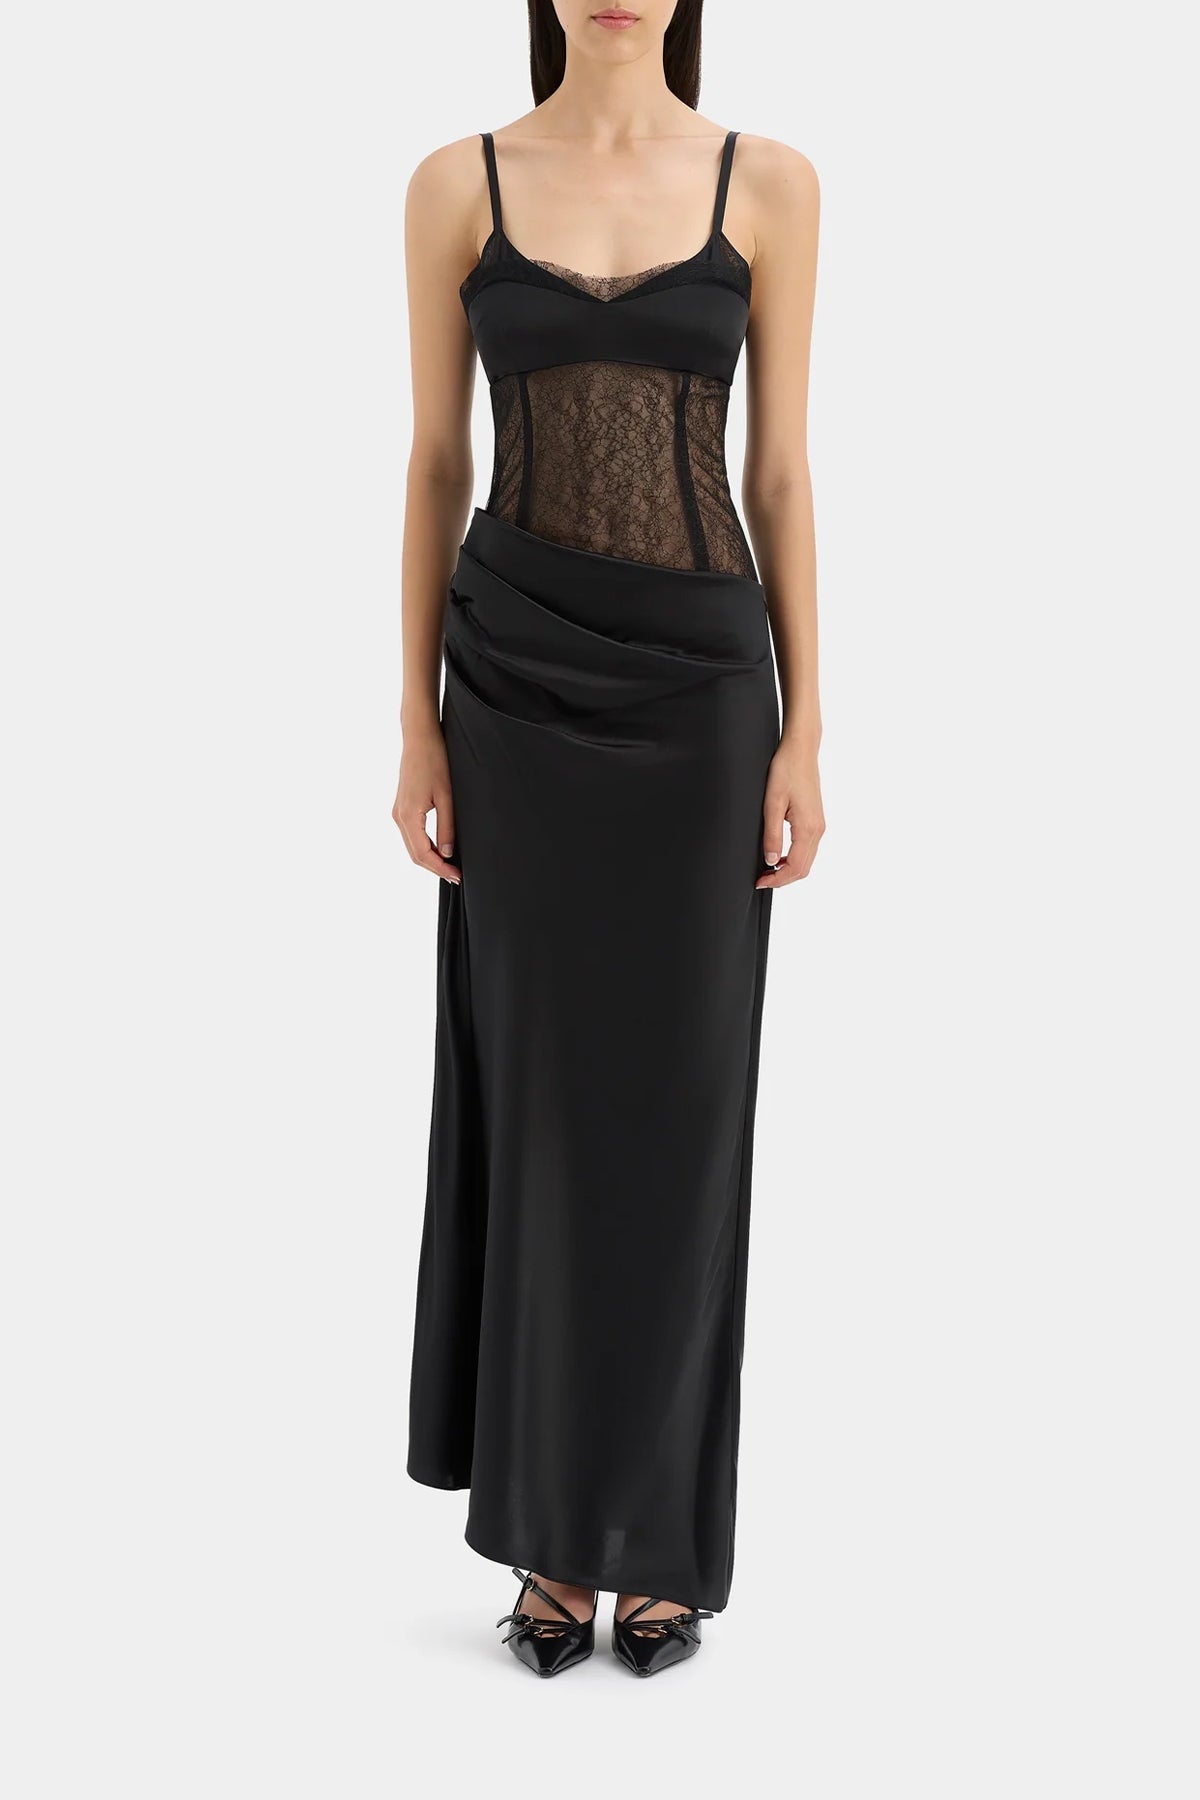 Dunya Draped Gown in Black - shop - olivia.com